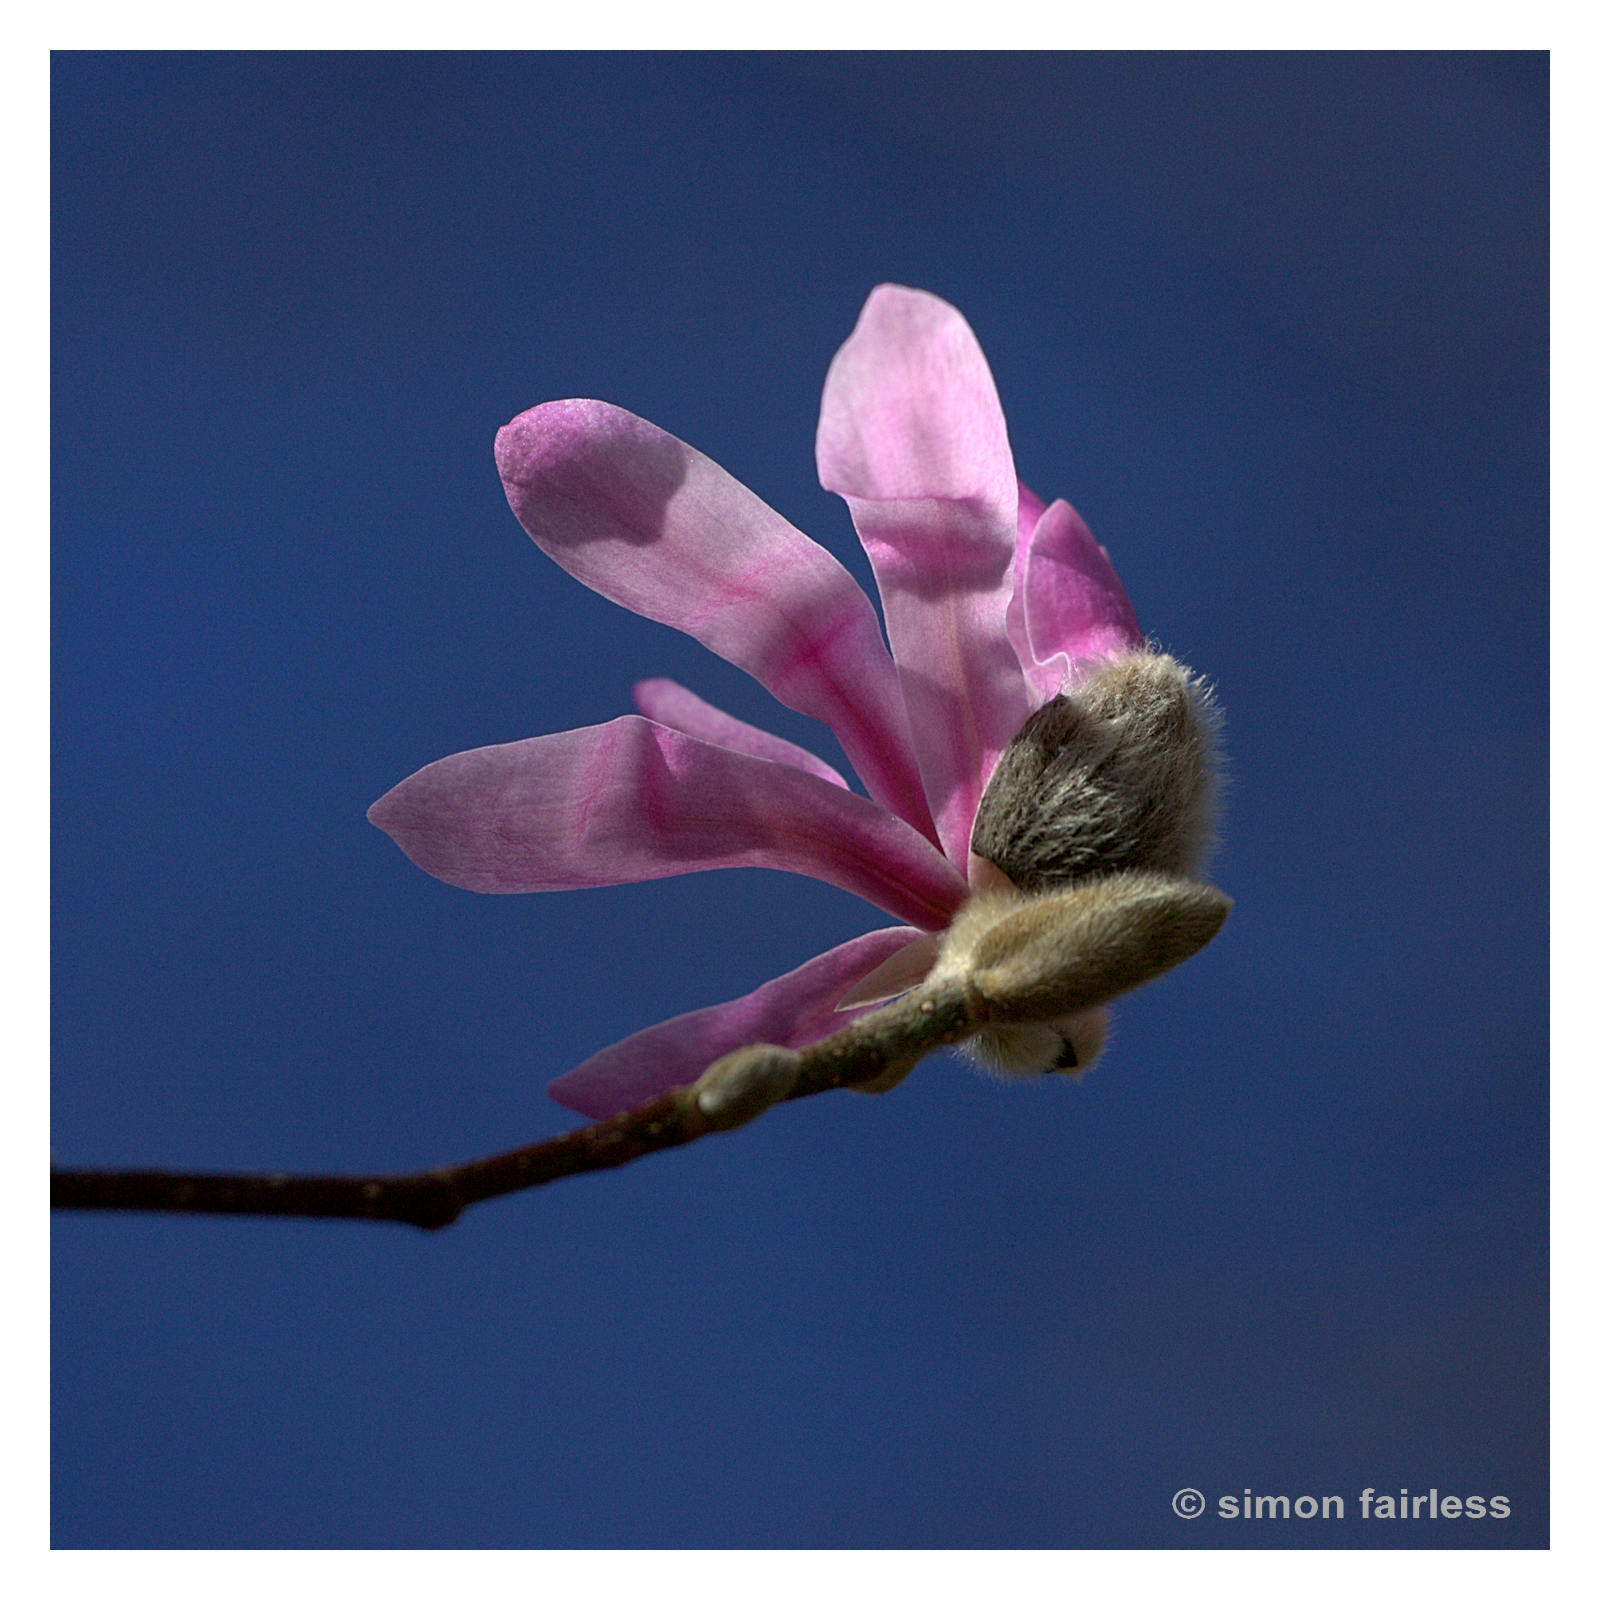 Floral Image of Magnolia blossom